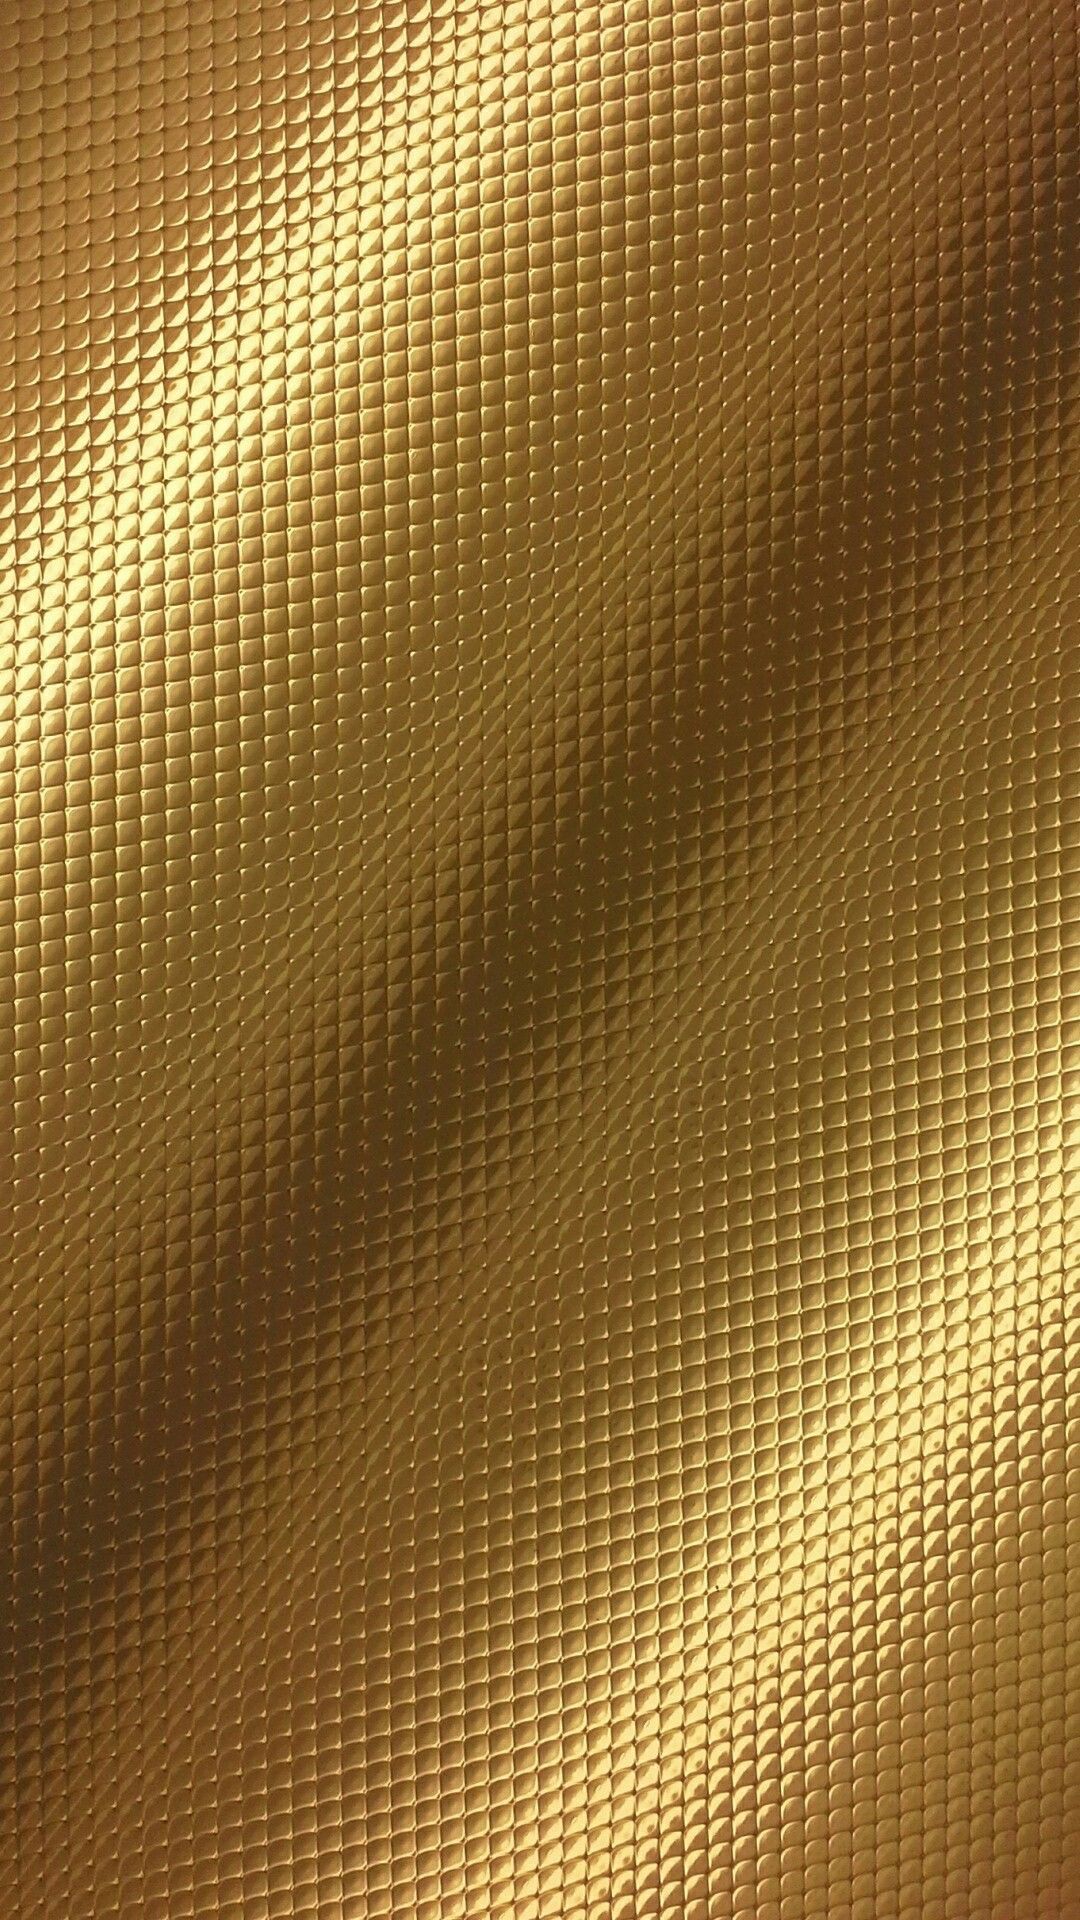 Fondo dorado | Fondos de pantalla en 2019 | Papel tapiz dorado, papel tapiz dorado